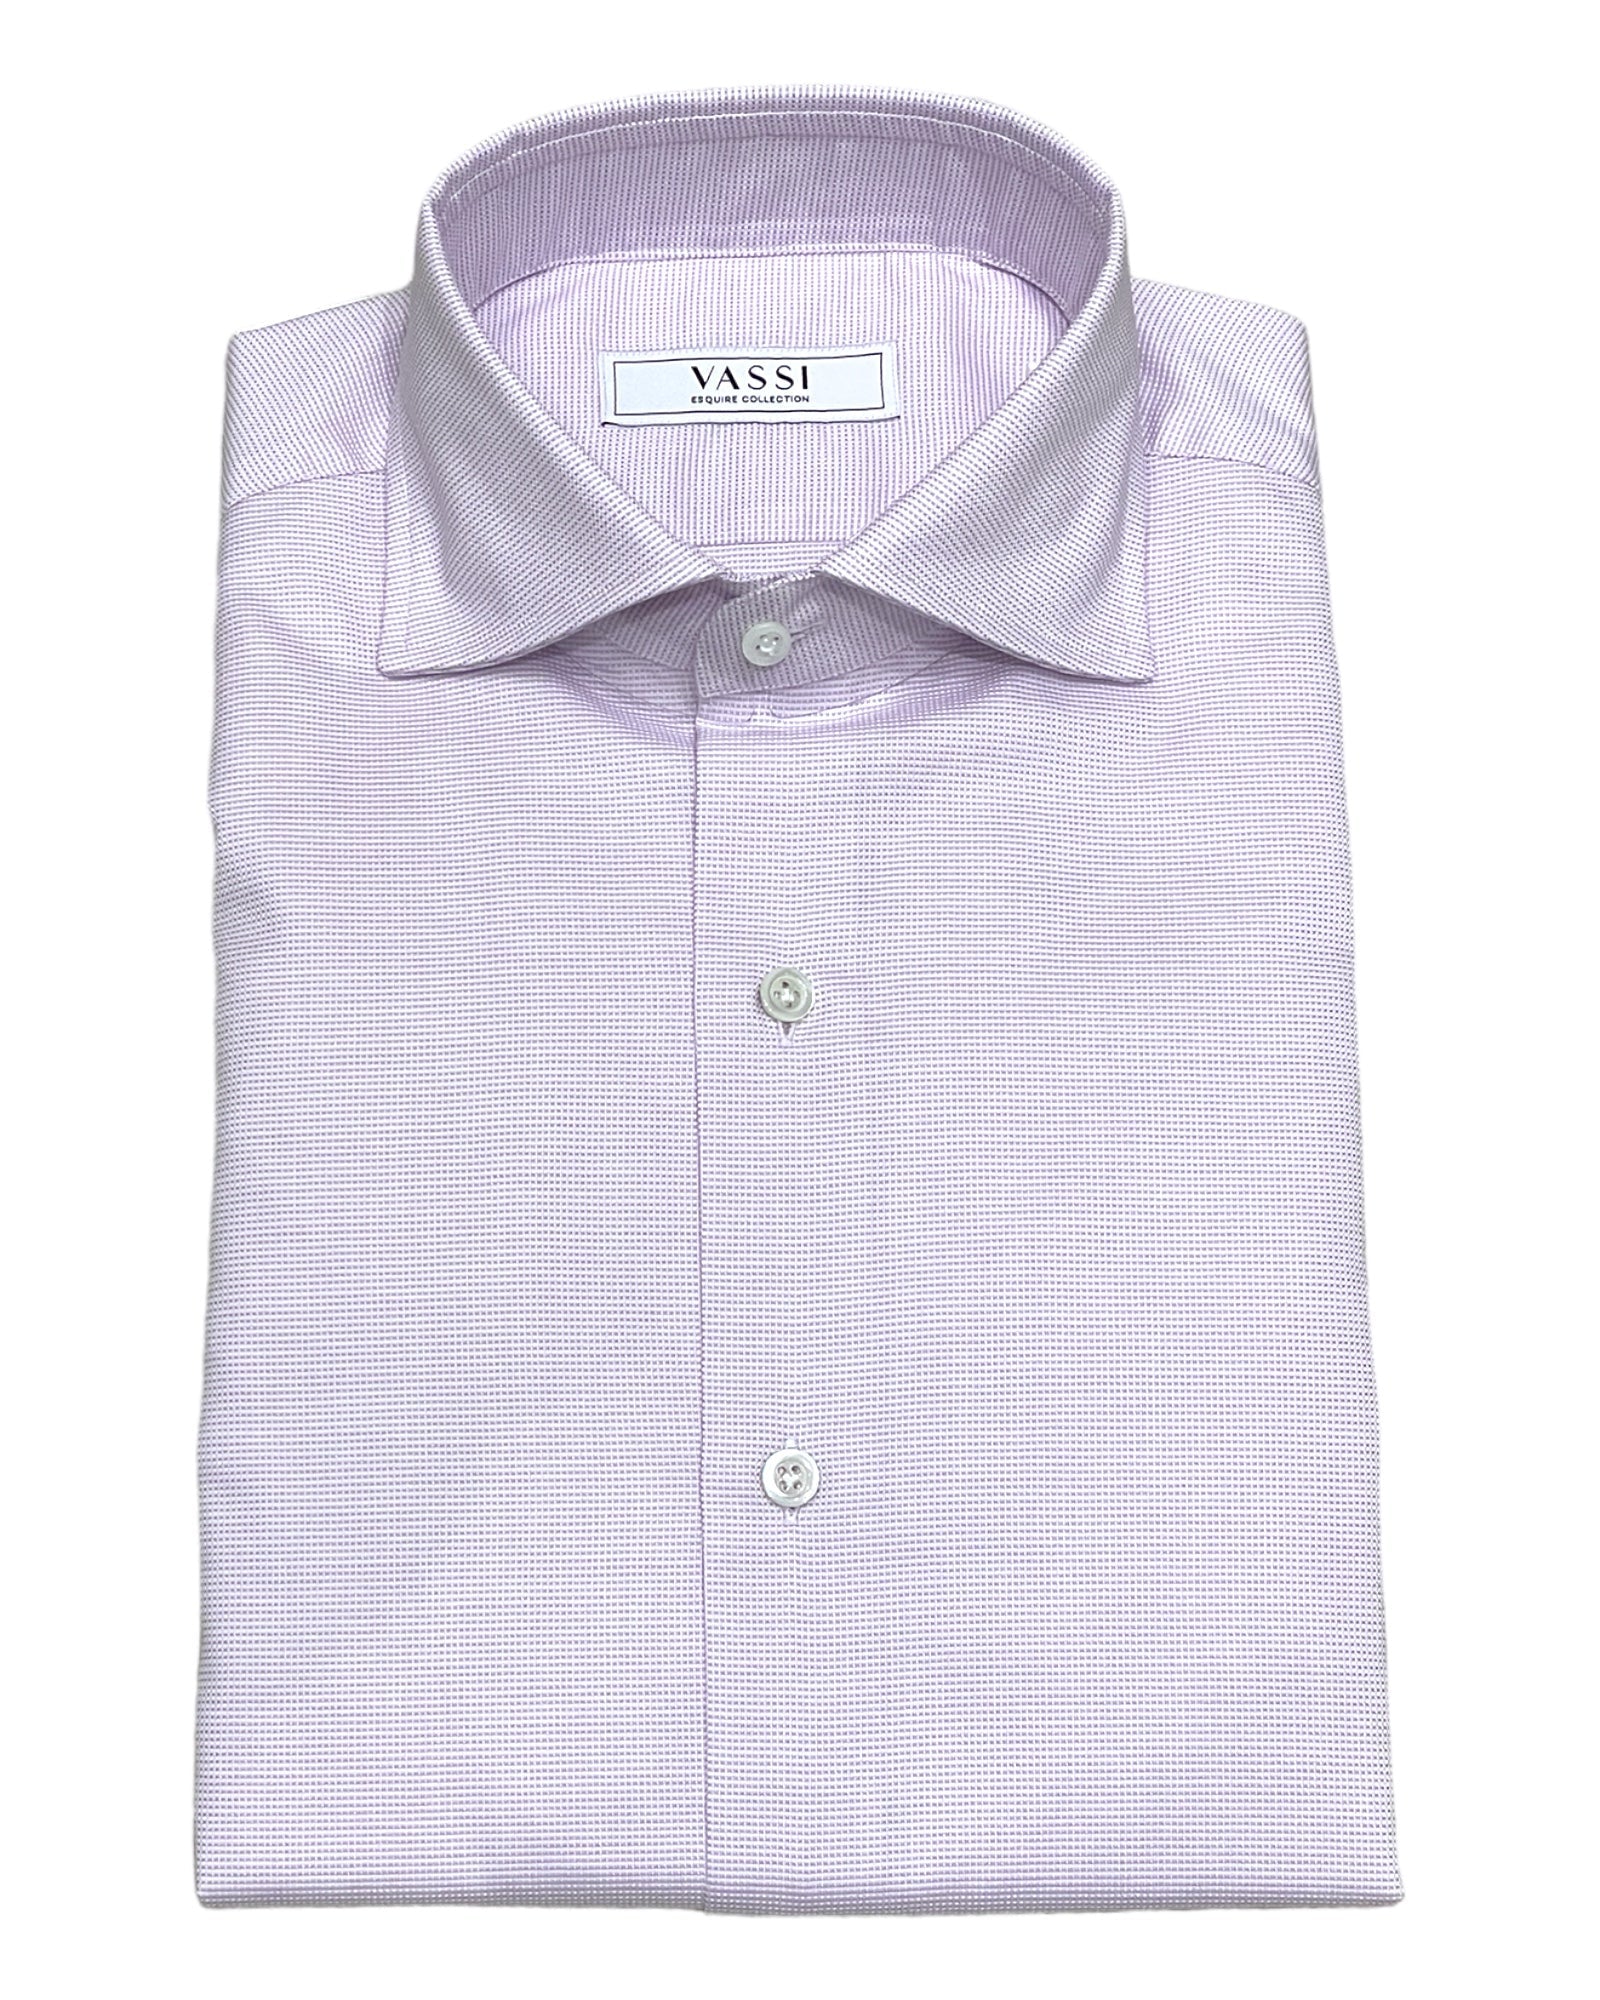 Thomas Mason Journey Oxford - Lavender DRESS SHIRTS15